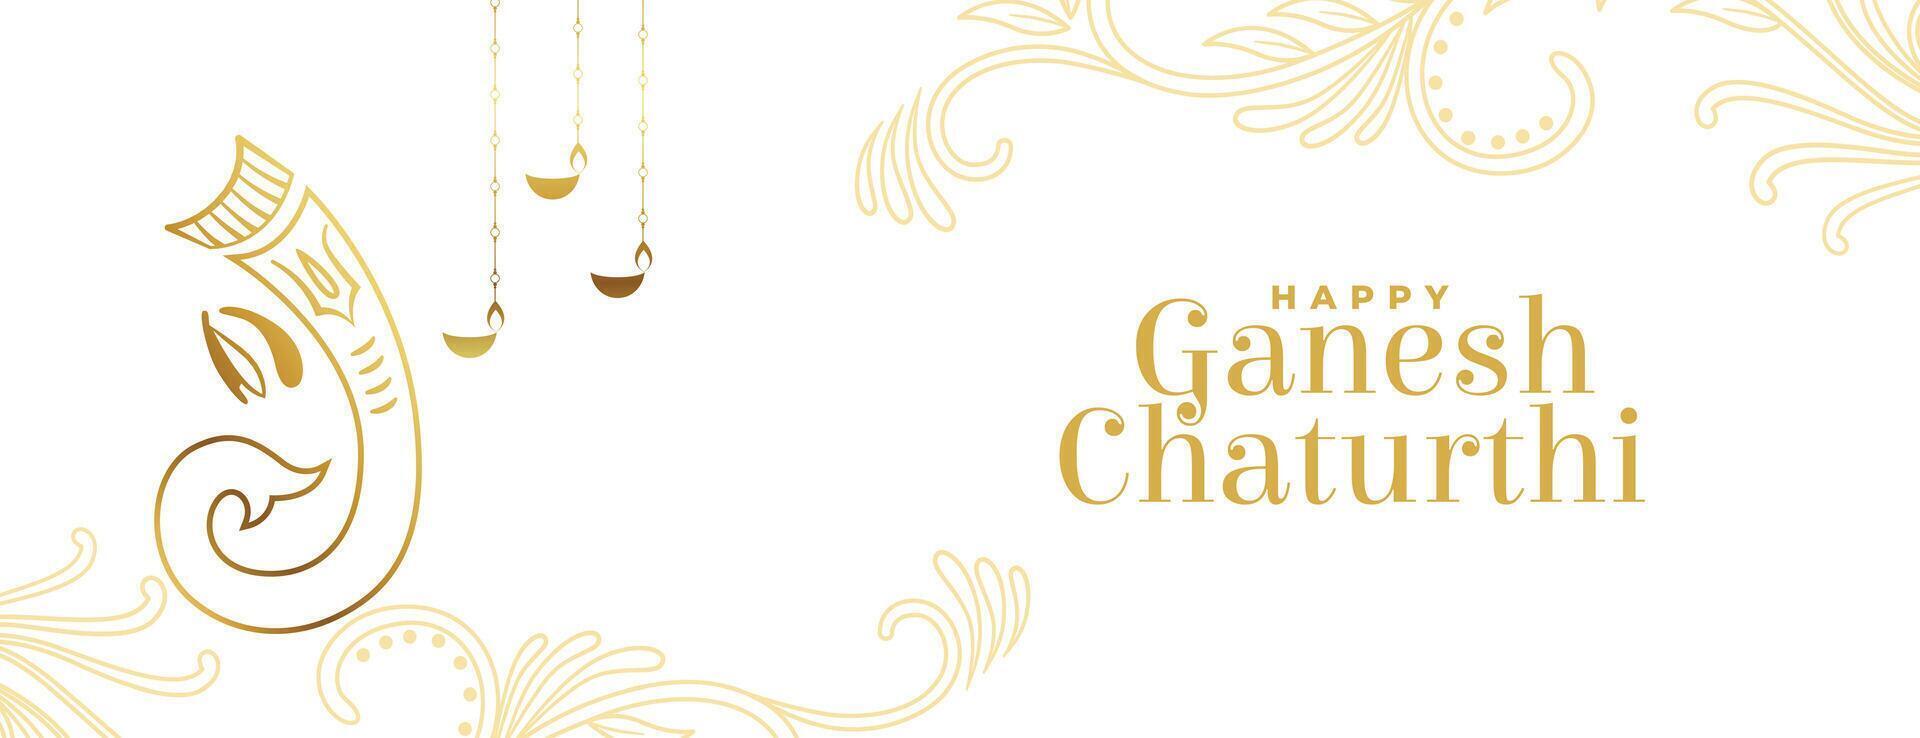 indian festival ganesh chaturthi banner in golden design vector